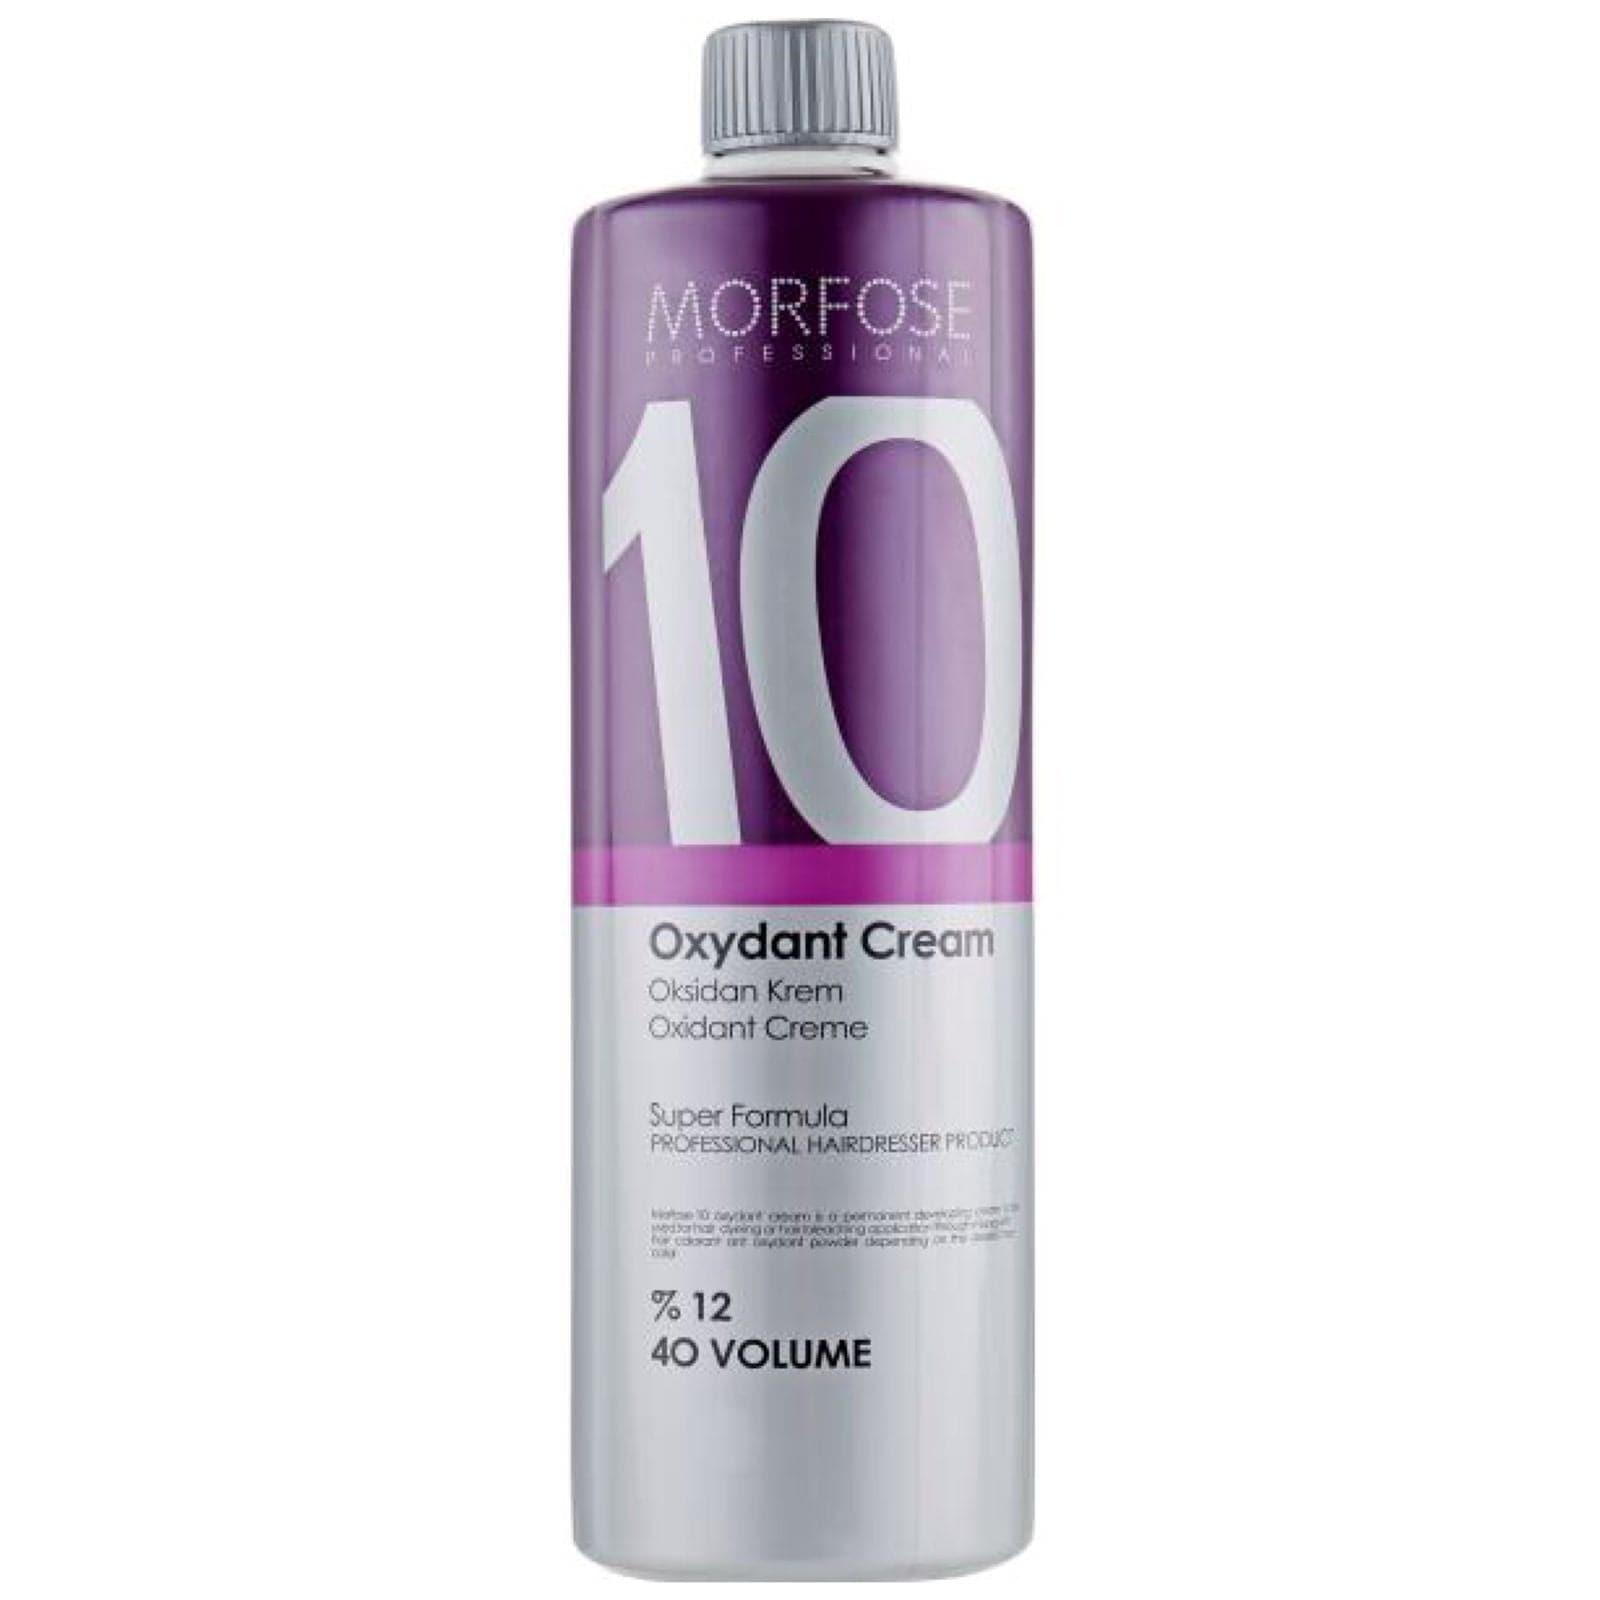 Morfose 10 Oxidant Cream 12% 40 Volume 1000ml